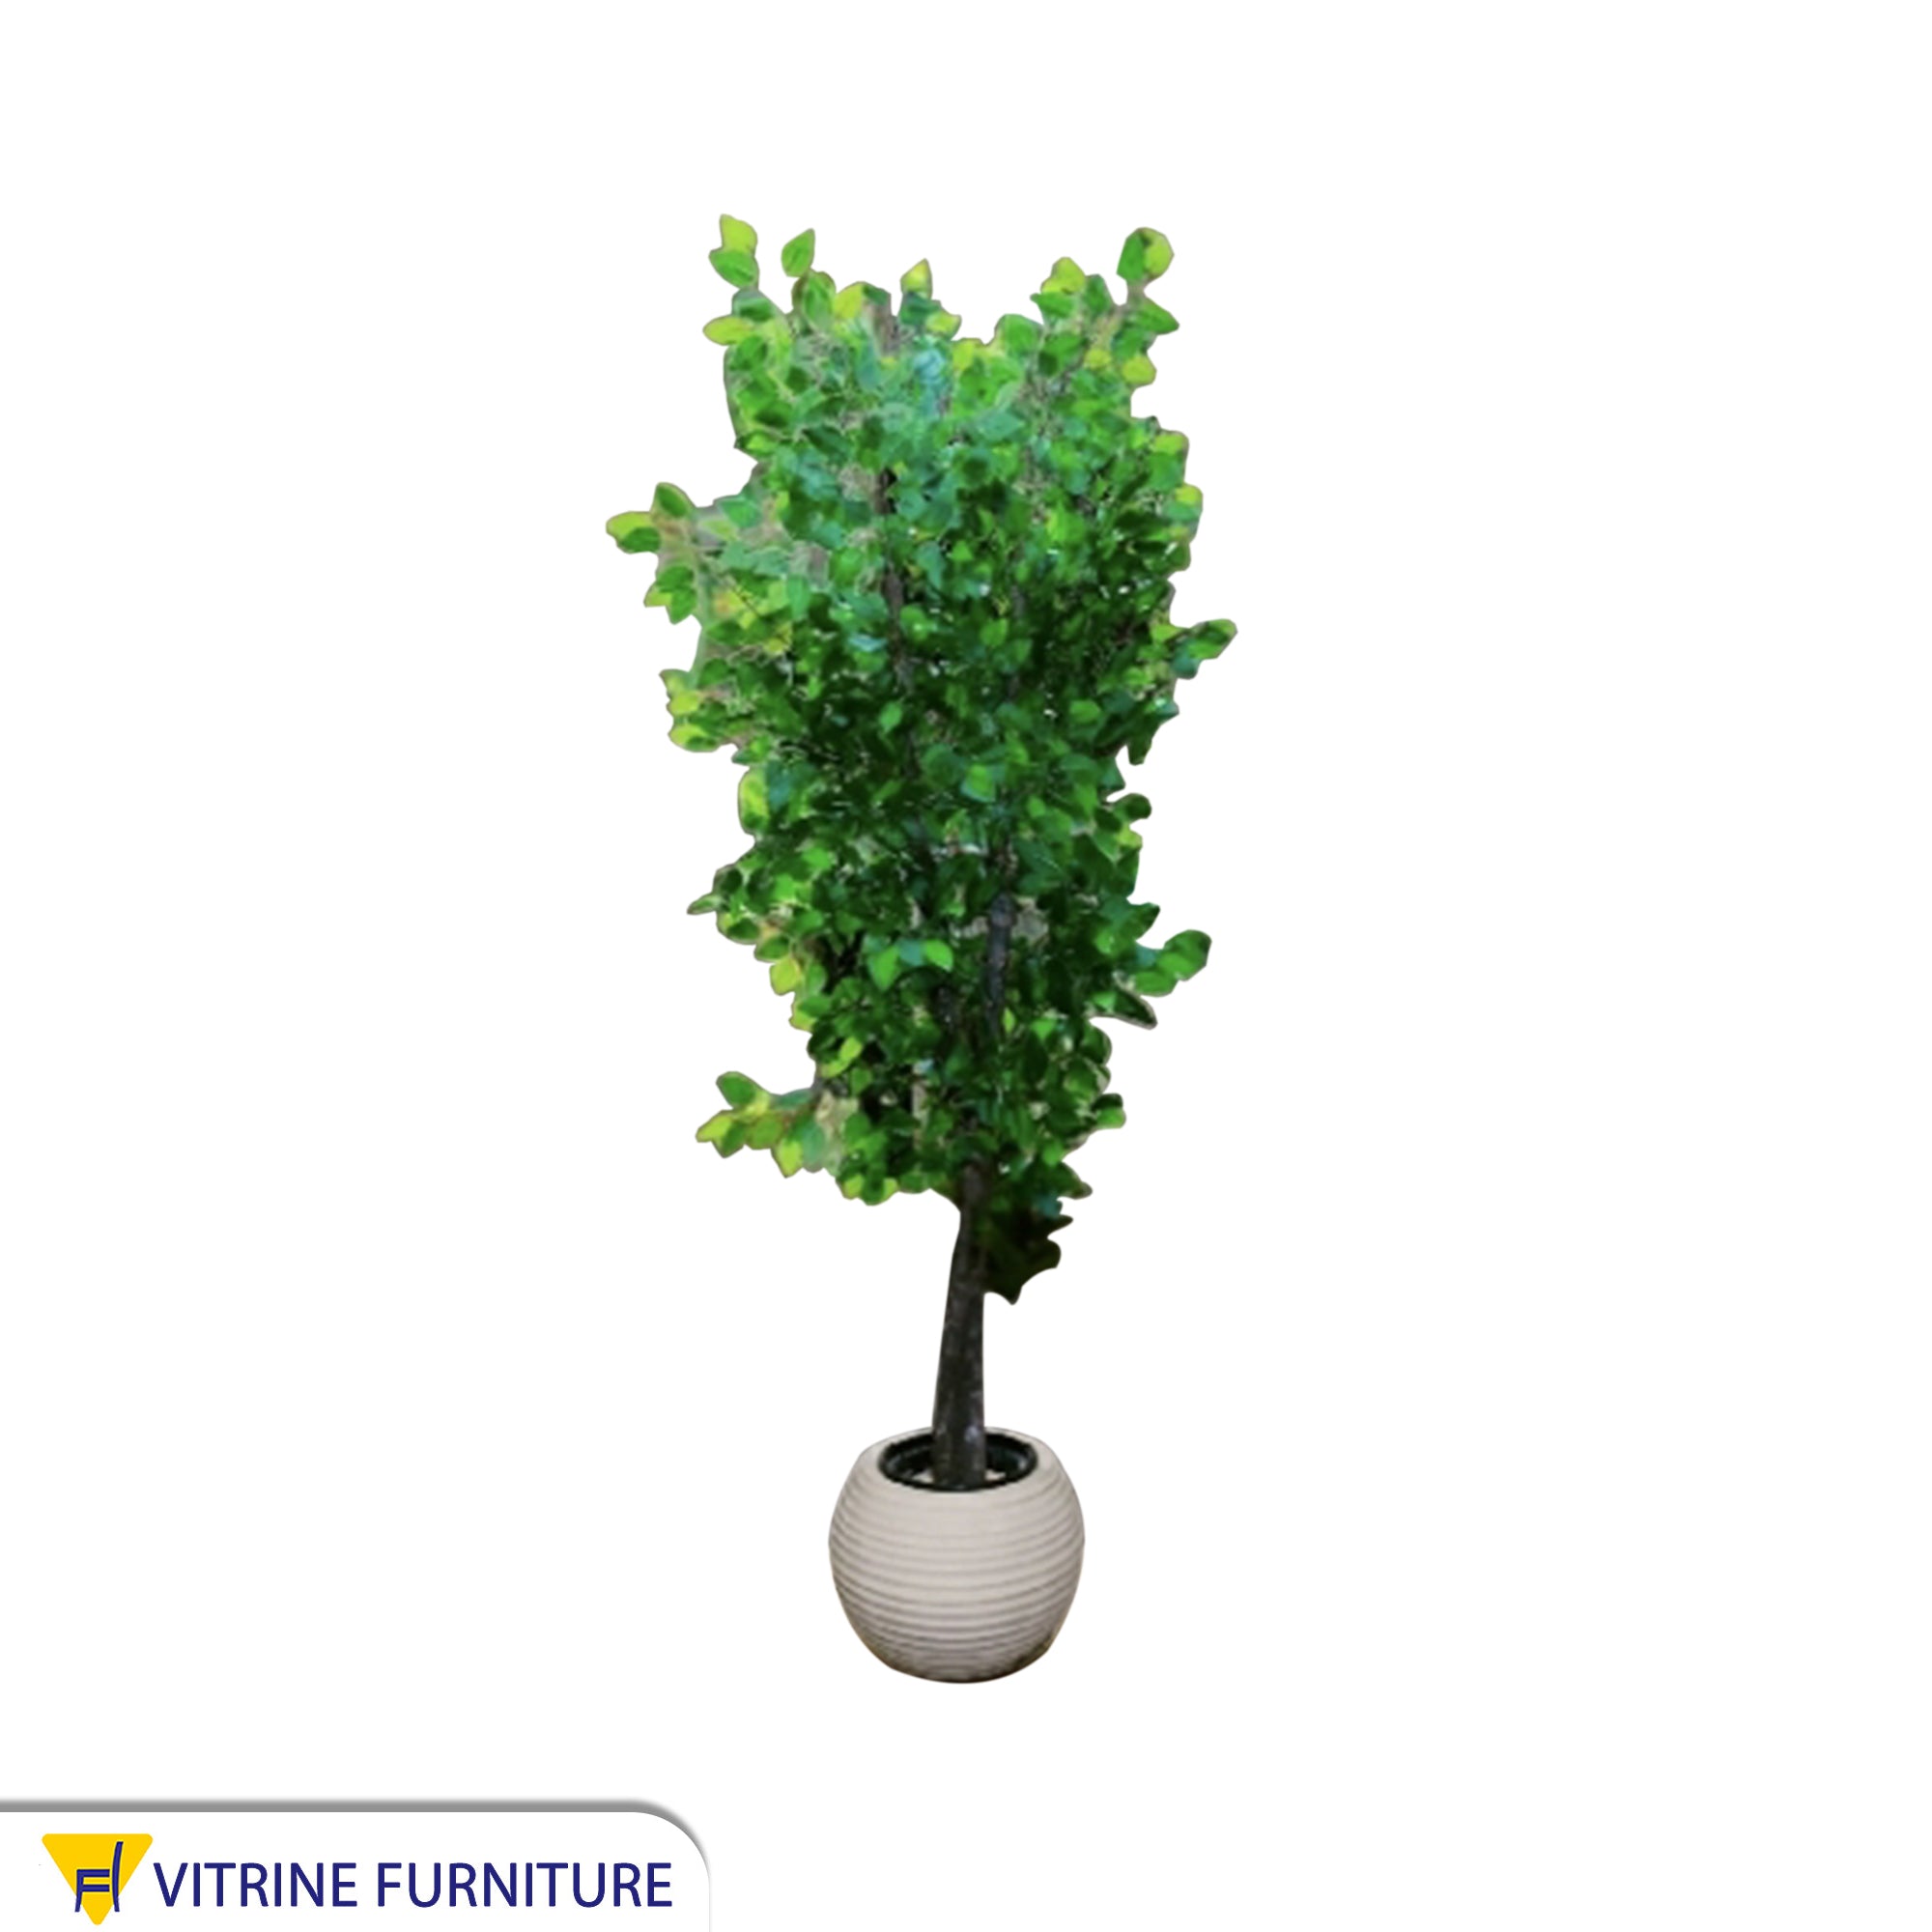 Acrylic pot for artificial trees